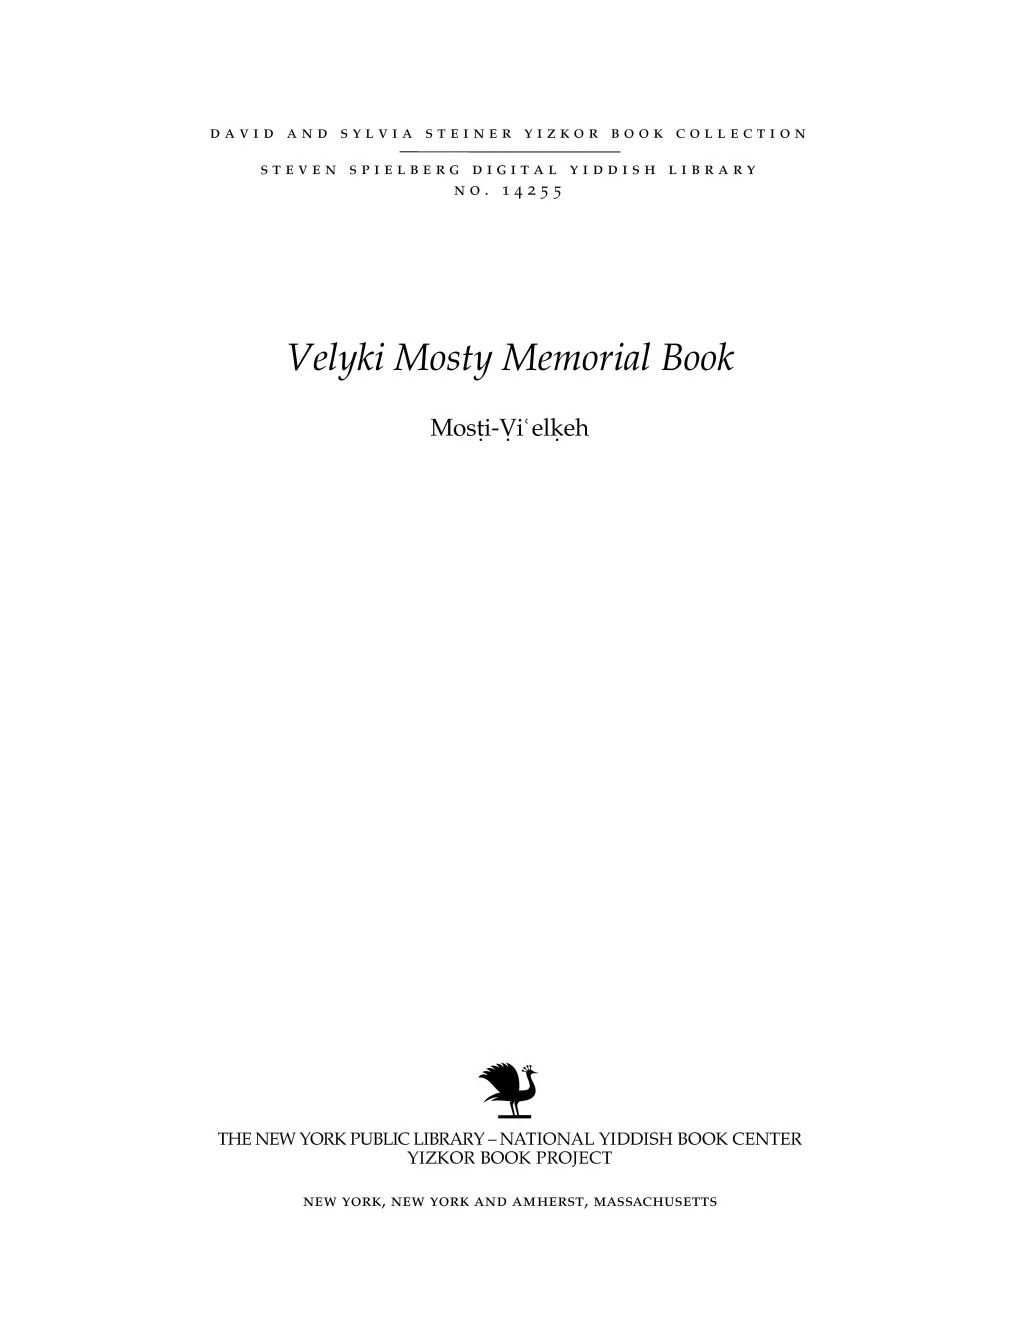 Velyki Mosty Memorial Book